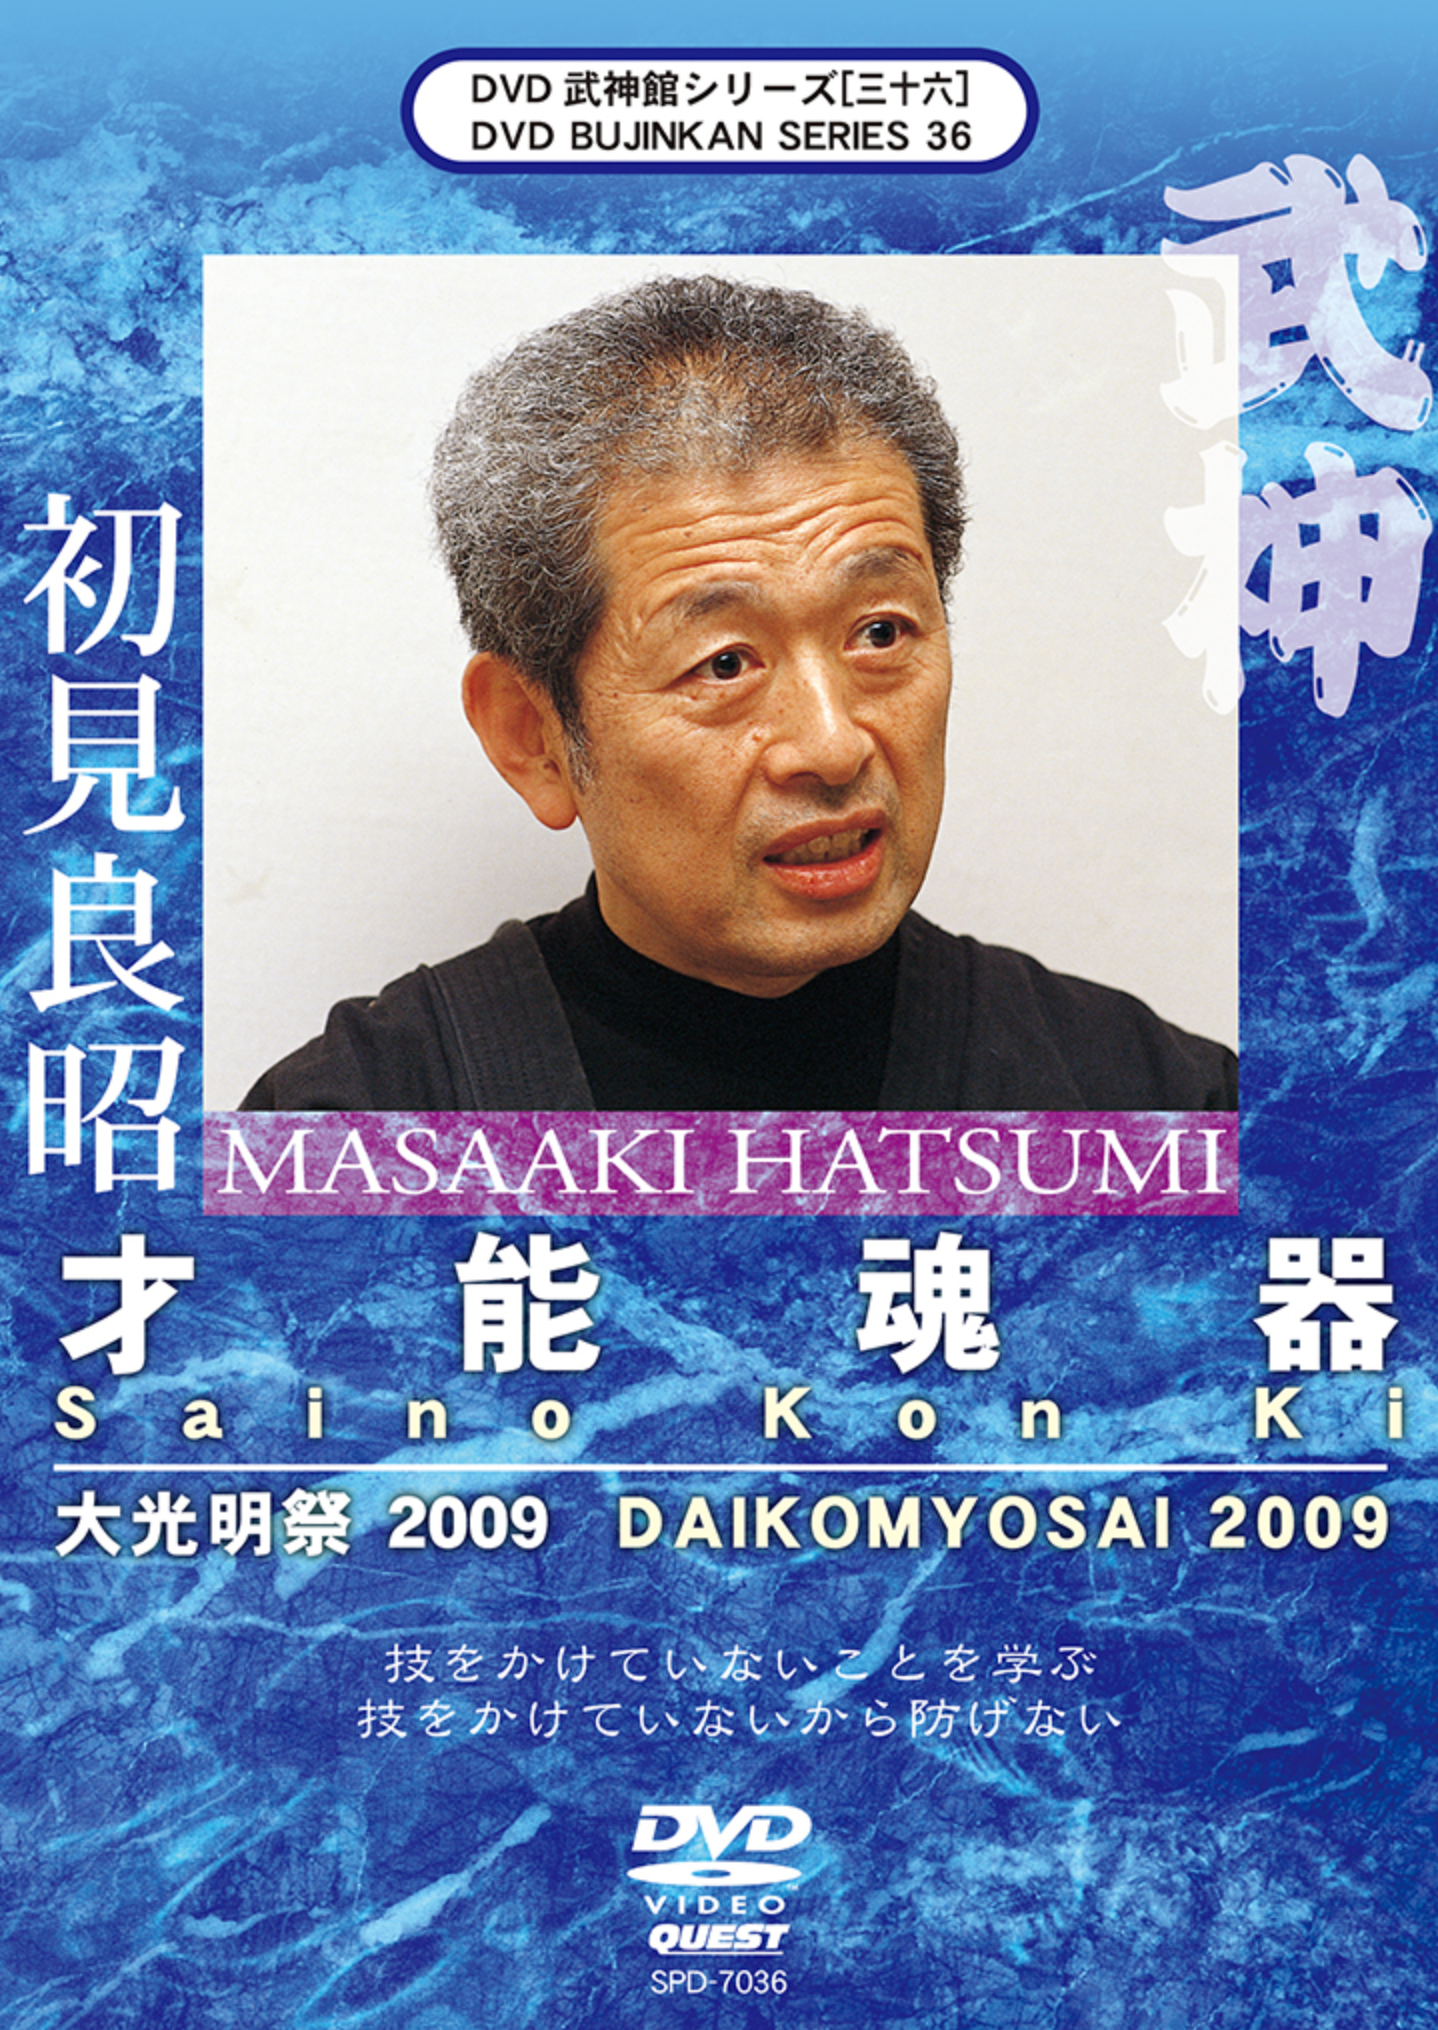 Bujinkan DVD Series 36: Saino Kon Ki with Masaaki Hatsumi - Budovideos Inc